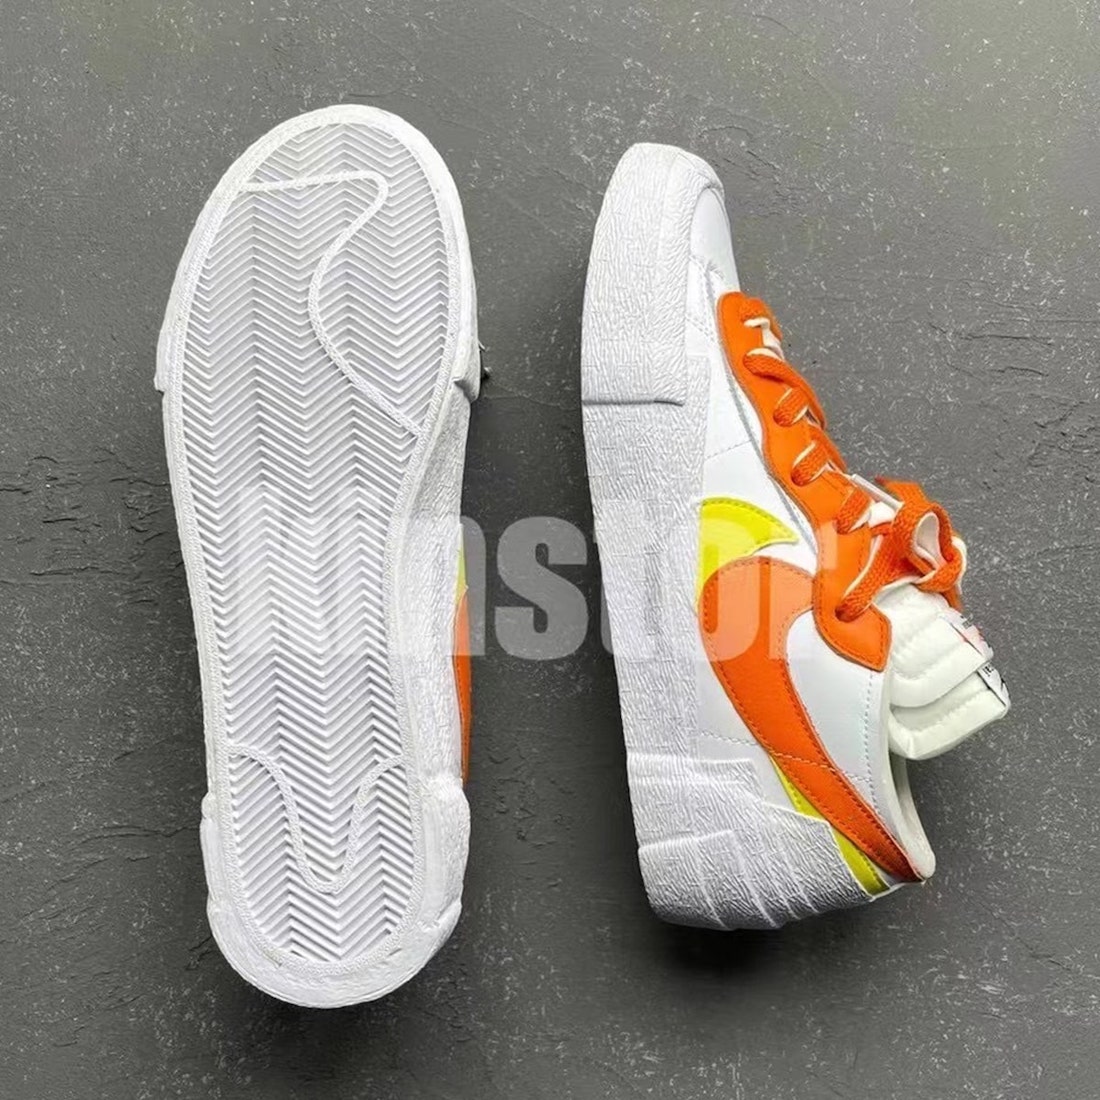 Sacai Nike Blazer Low Magma Orange DD1877 100 Release Date Pricing 7